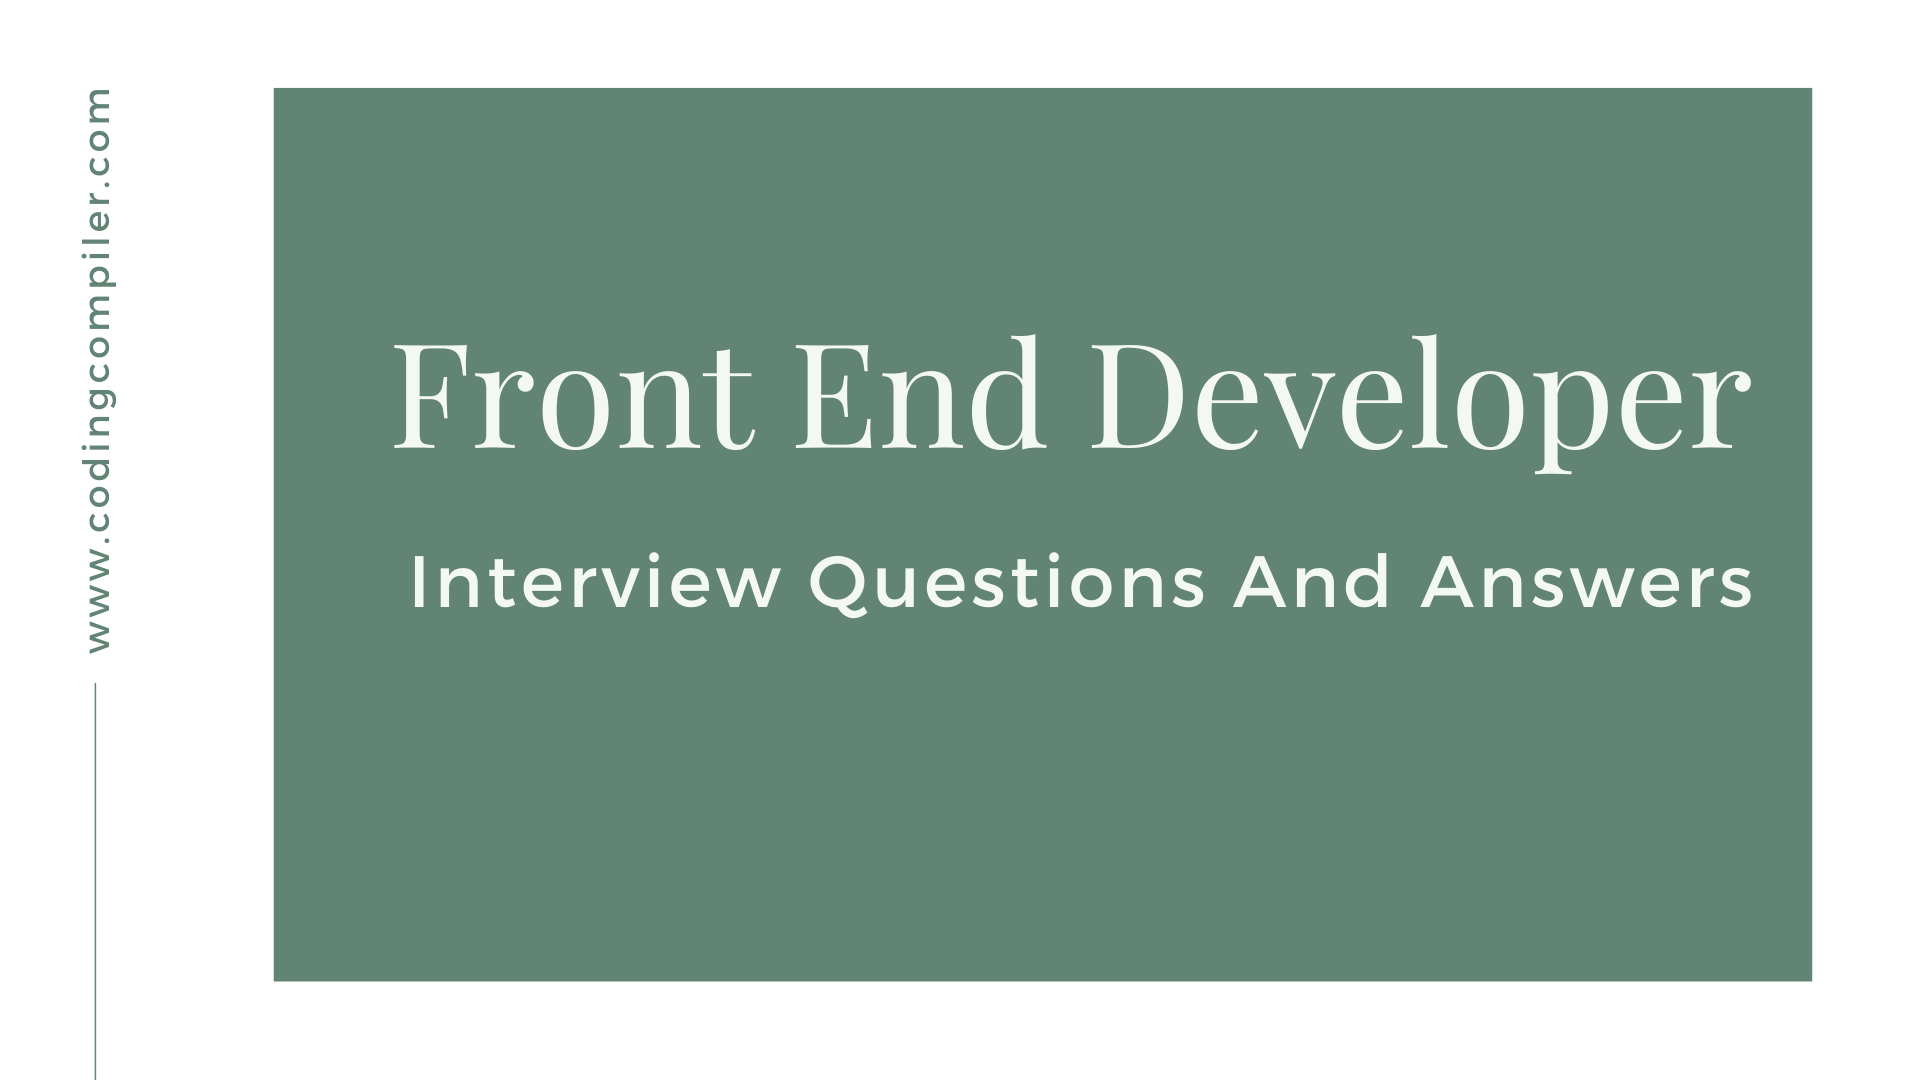 Front End Developer Interview Questions